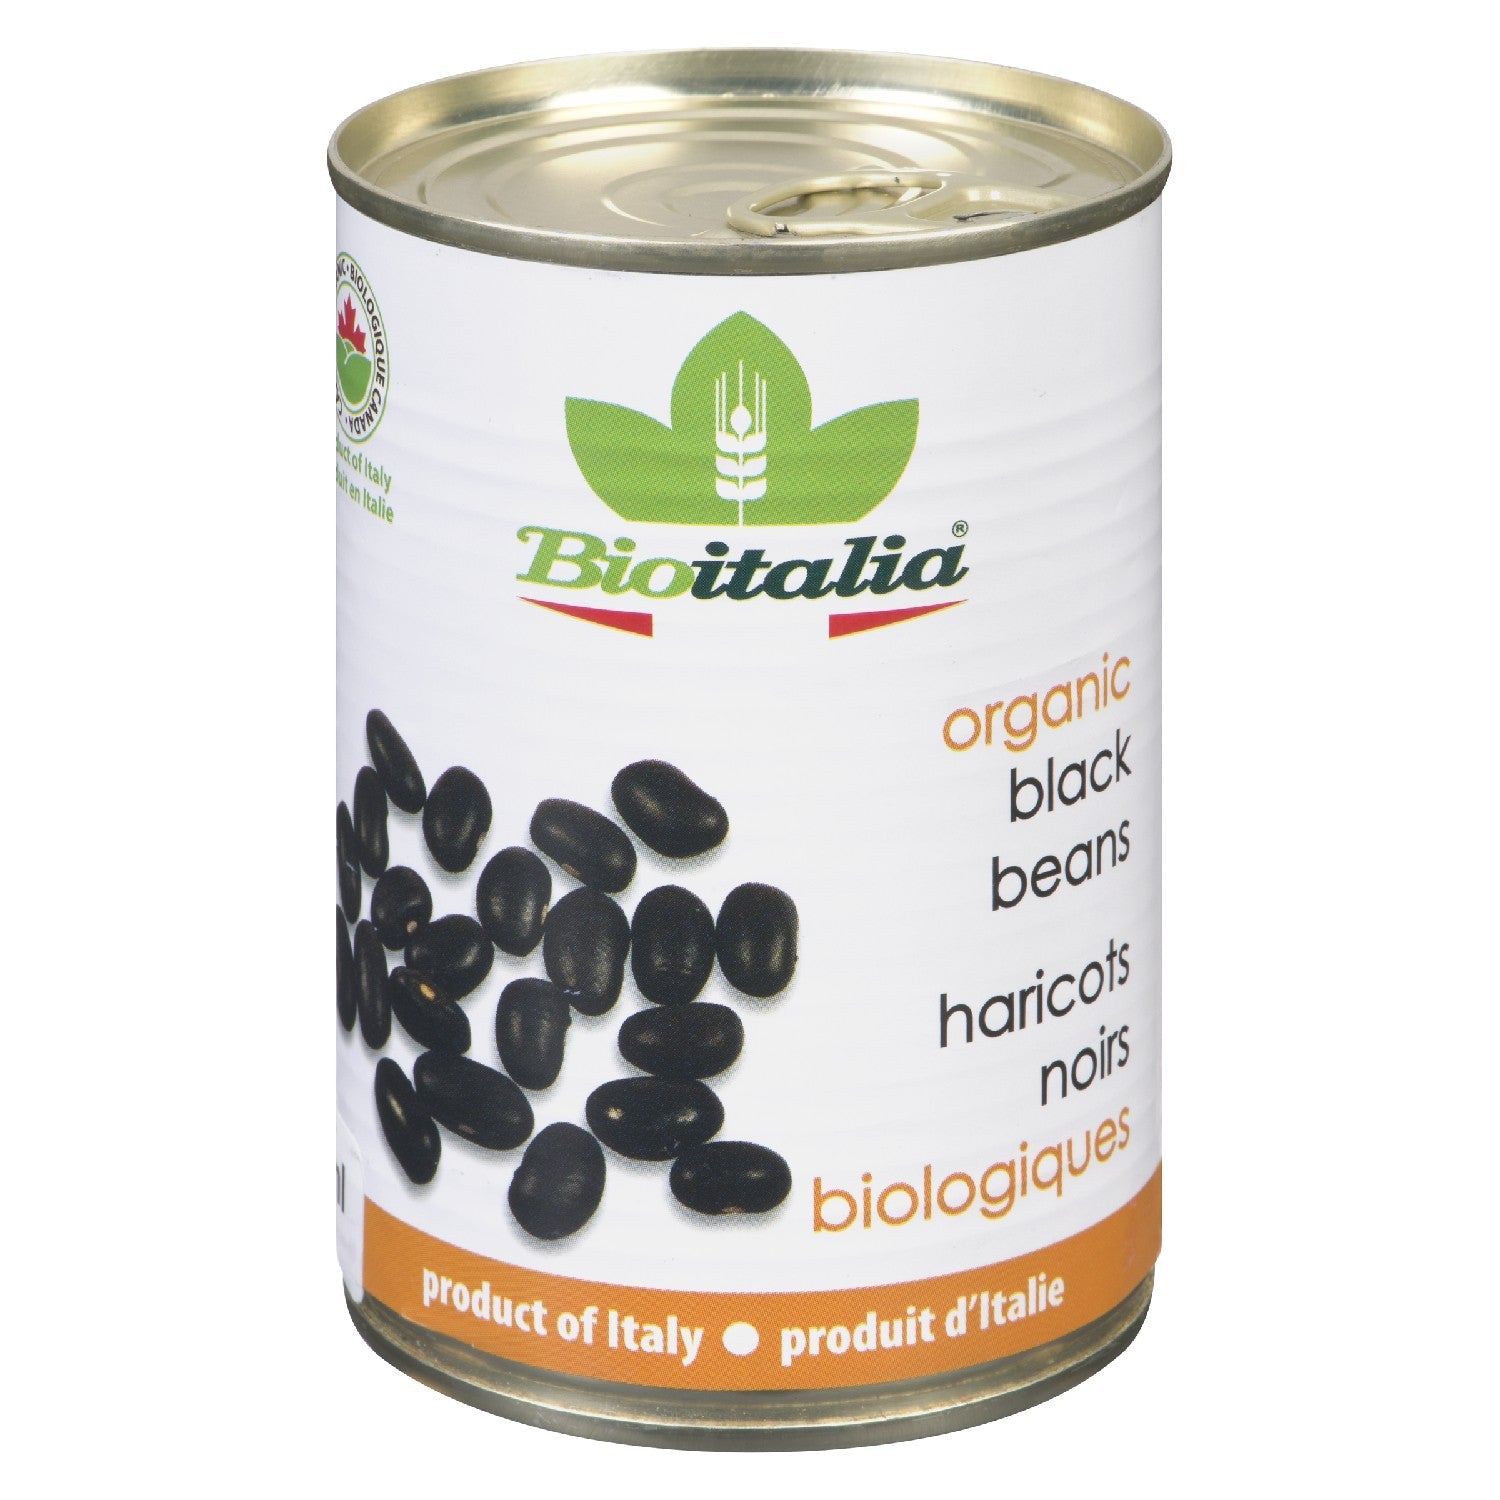 Organic black beans 398ml